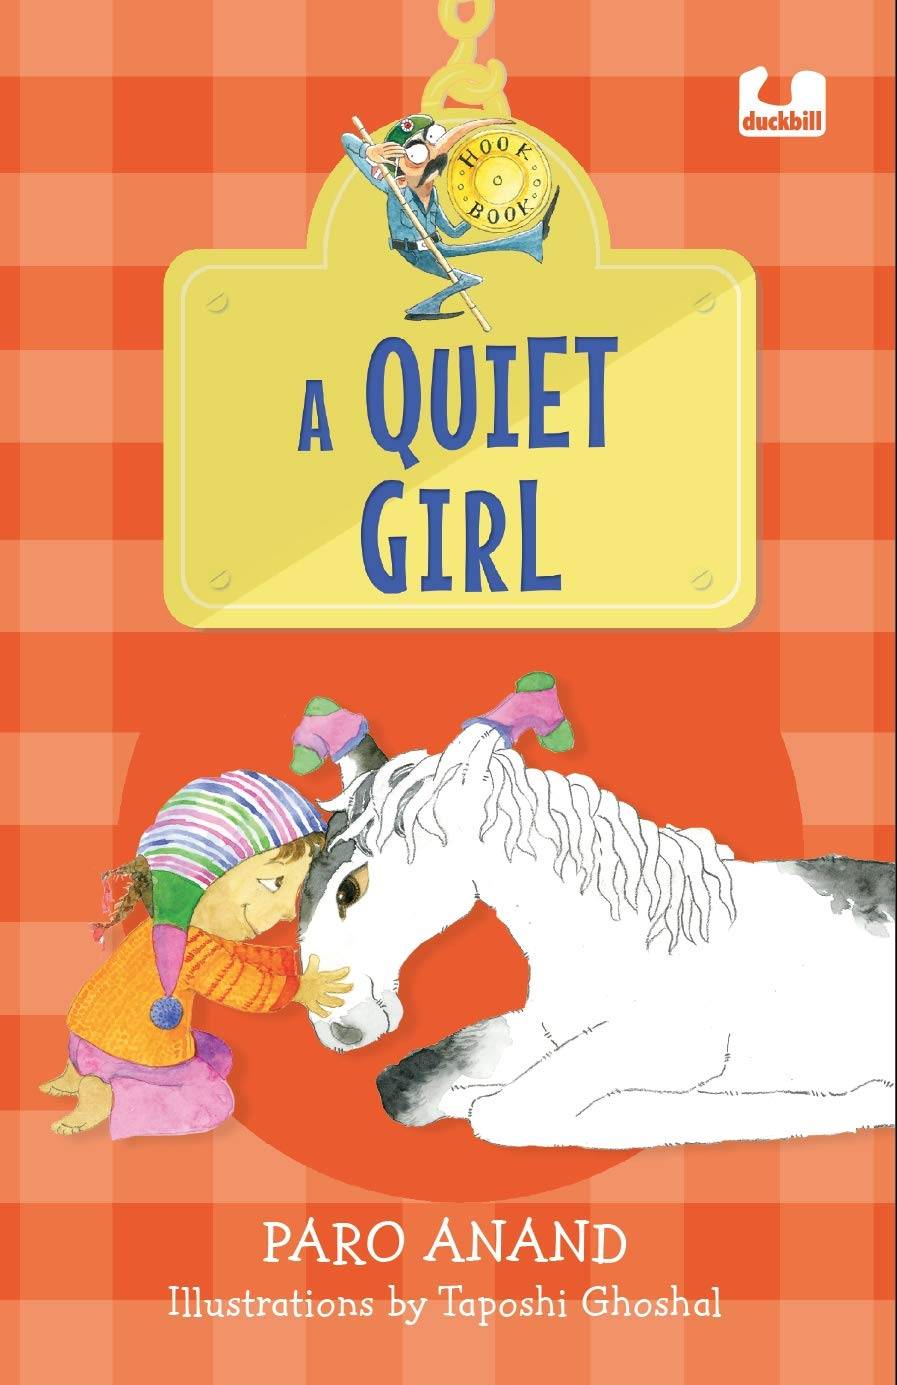 IMG : Hook Book A quiet Girl